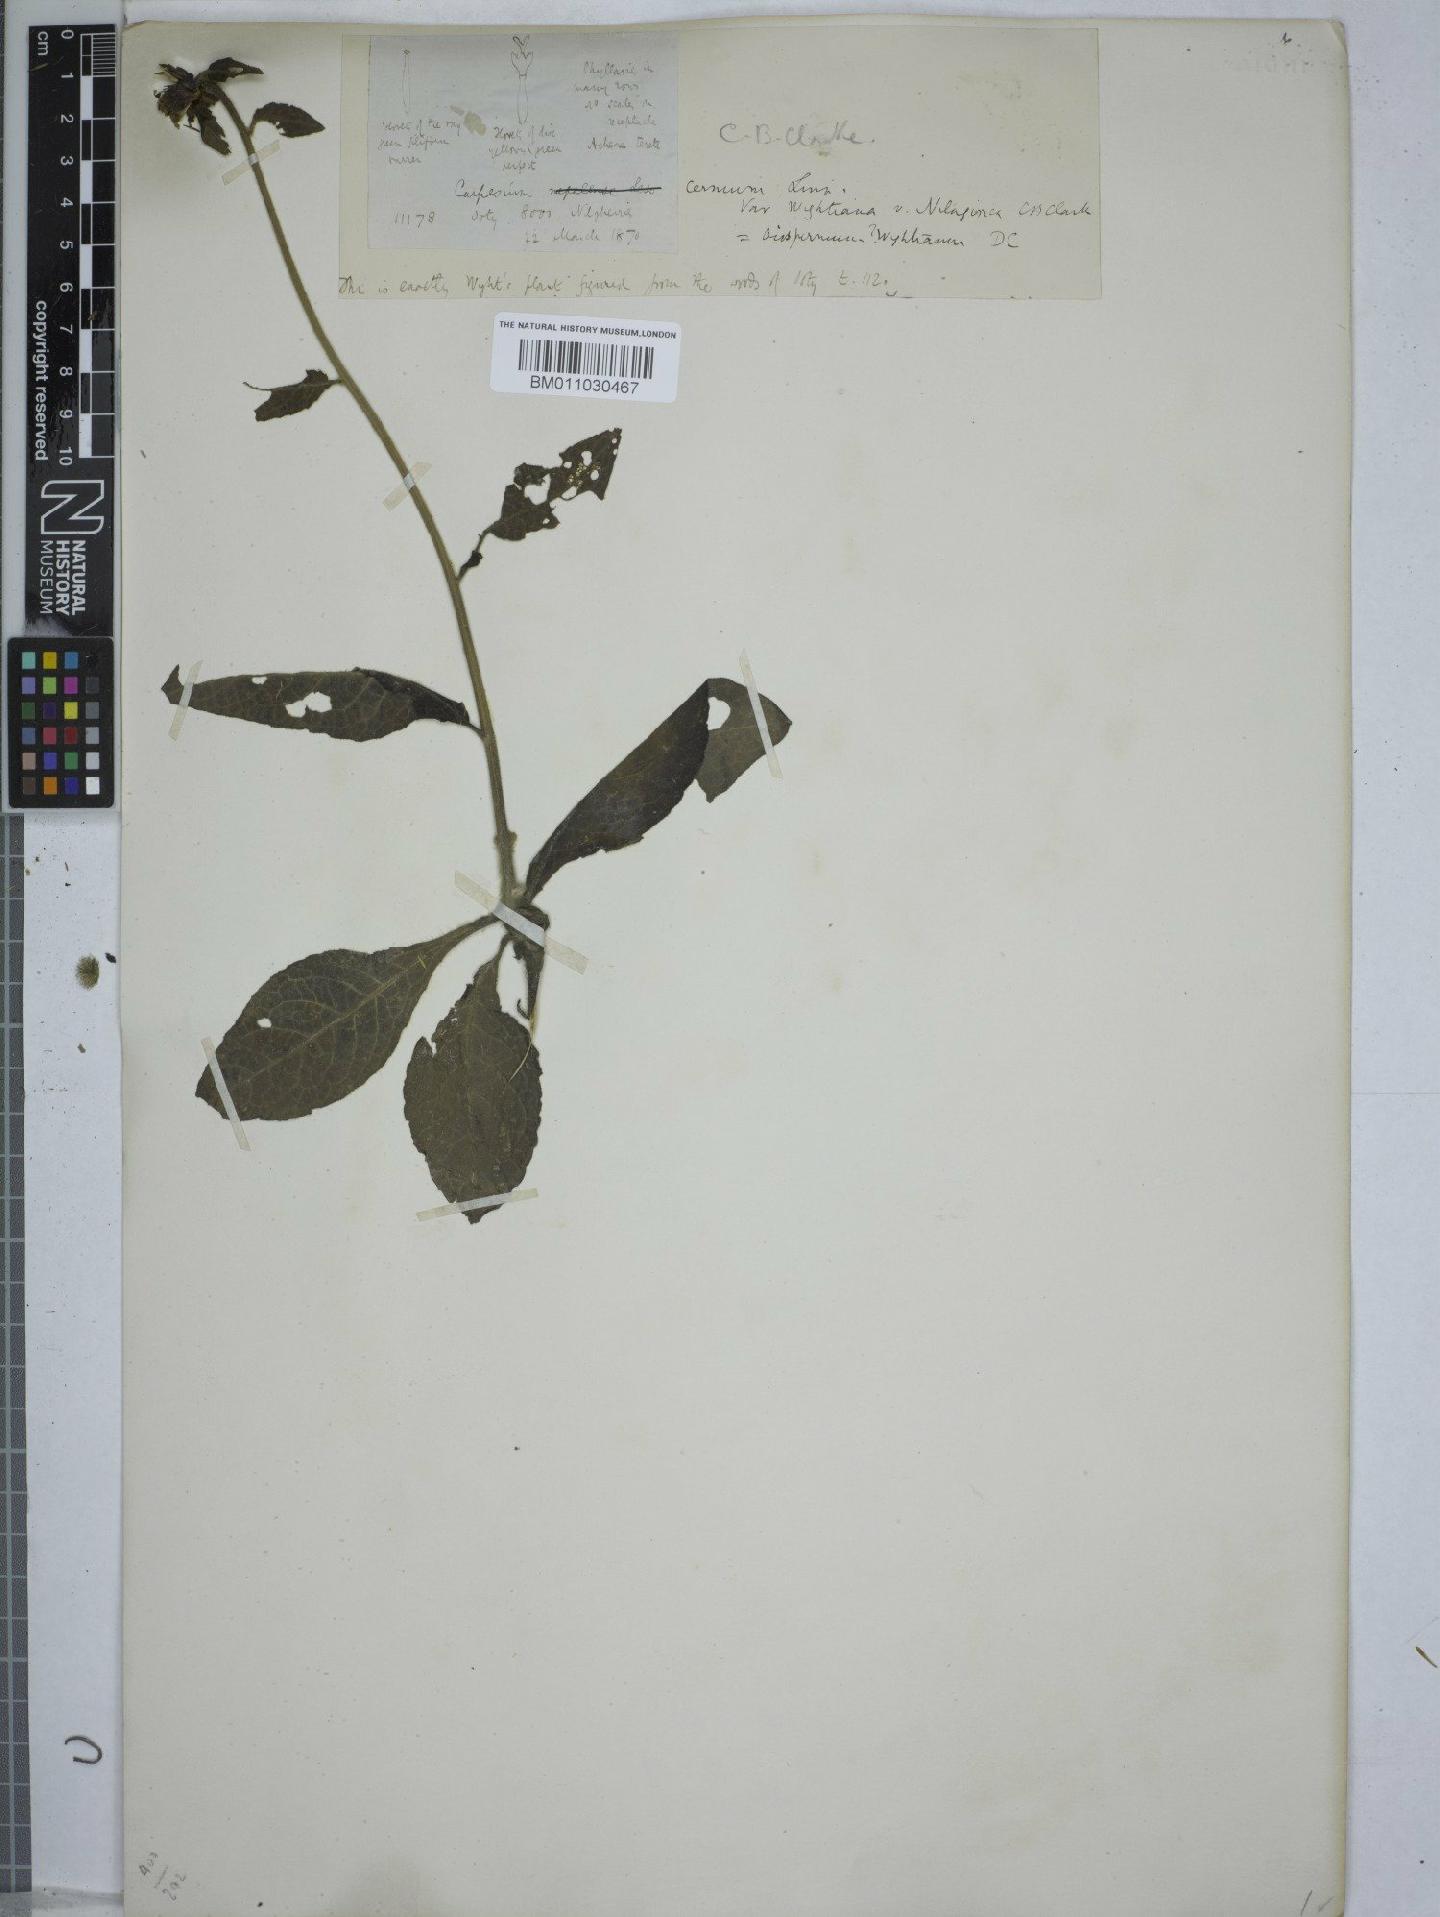 To NHMUK collection (Carpesium nepalense Less; NHMUK:ecatalogue:9154161)